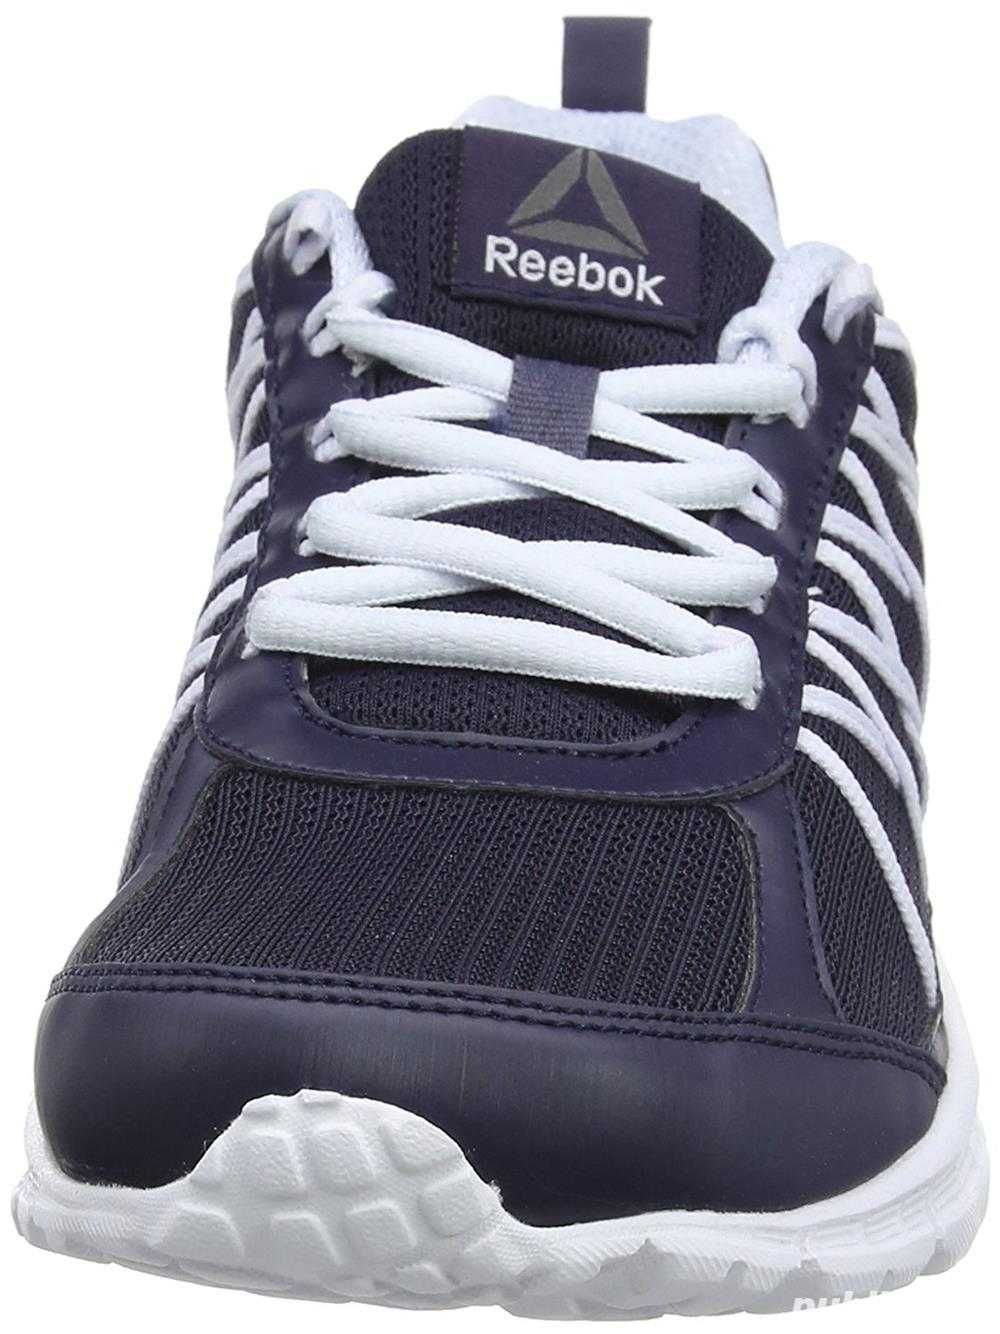 44_adidasi originali barbati Reebok Running_albastru_Promotie